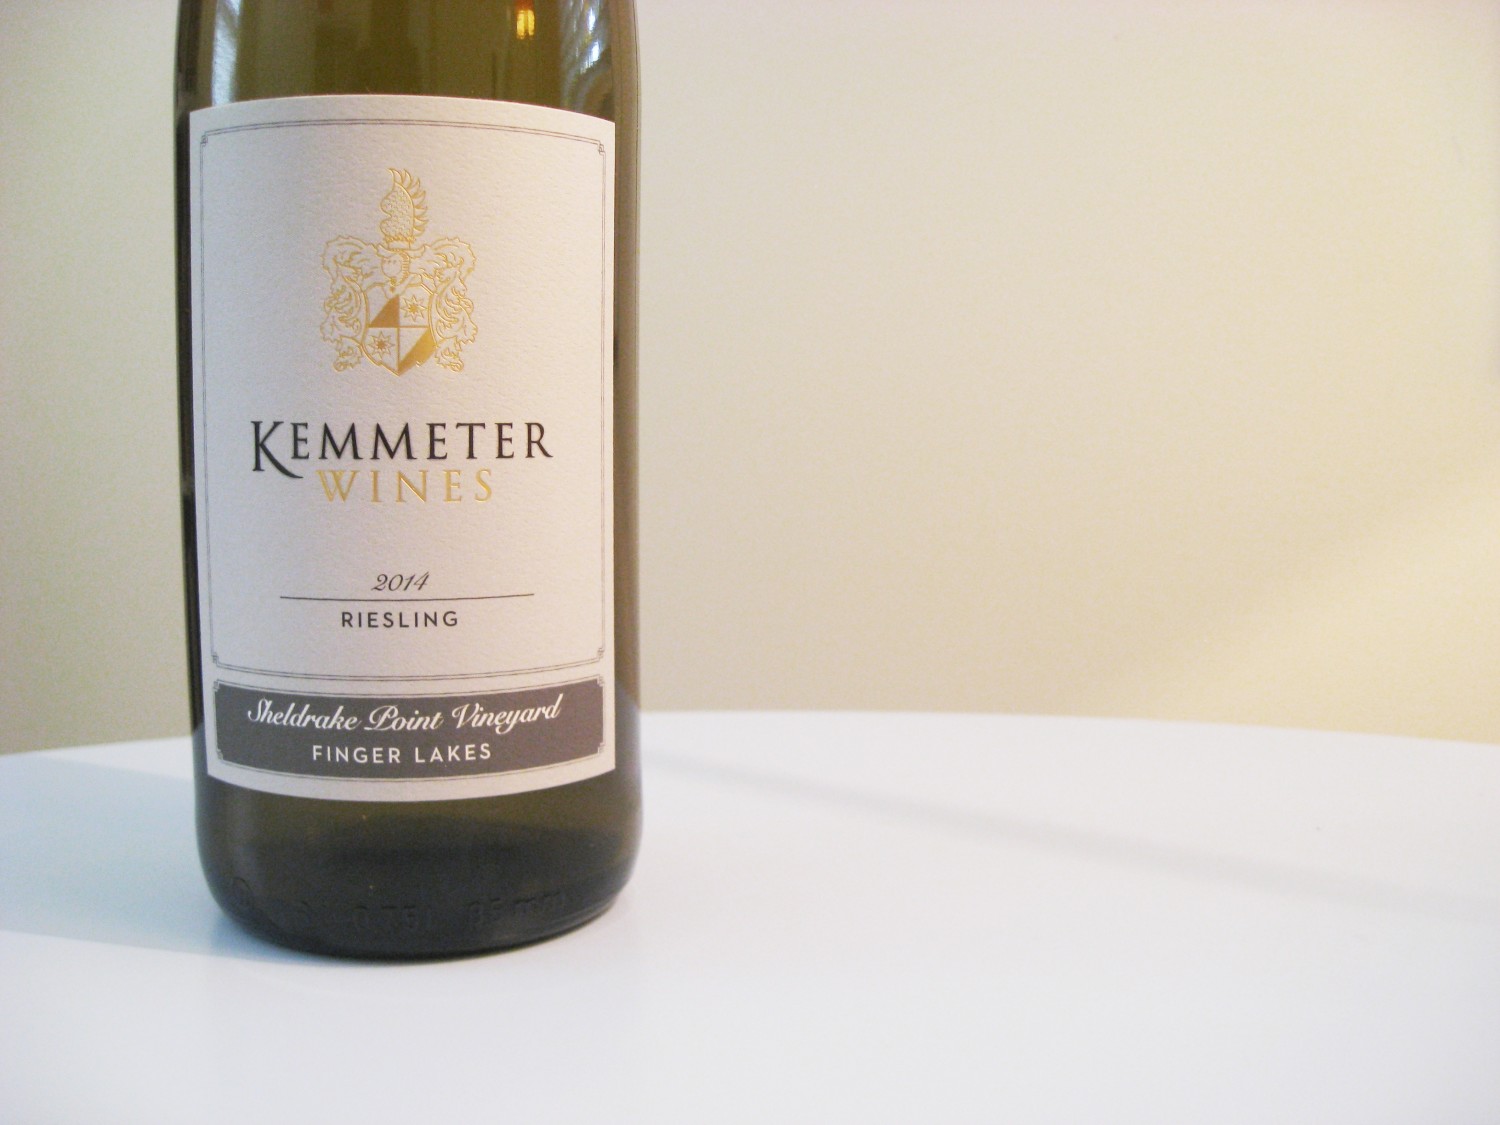 Kemmeter Wines, Riesling 2014, Sheldrake Point Vineyard, Finger Lakes, New York, Wine Casual